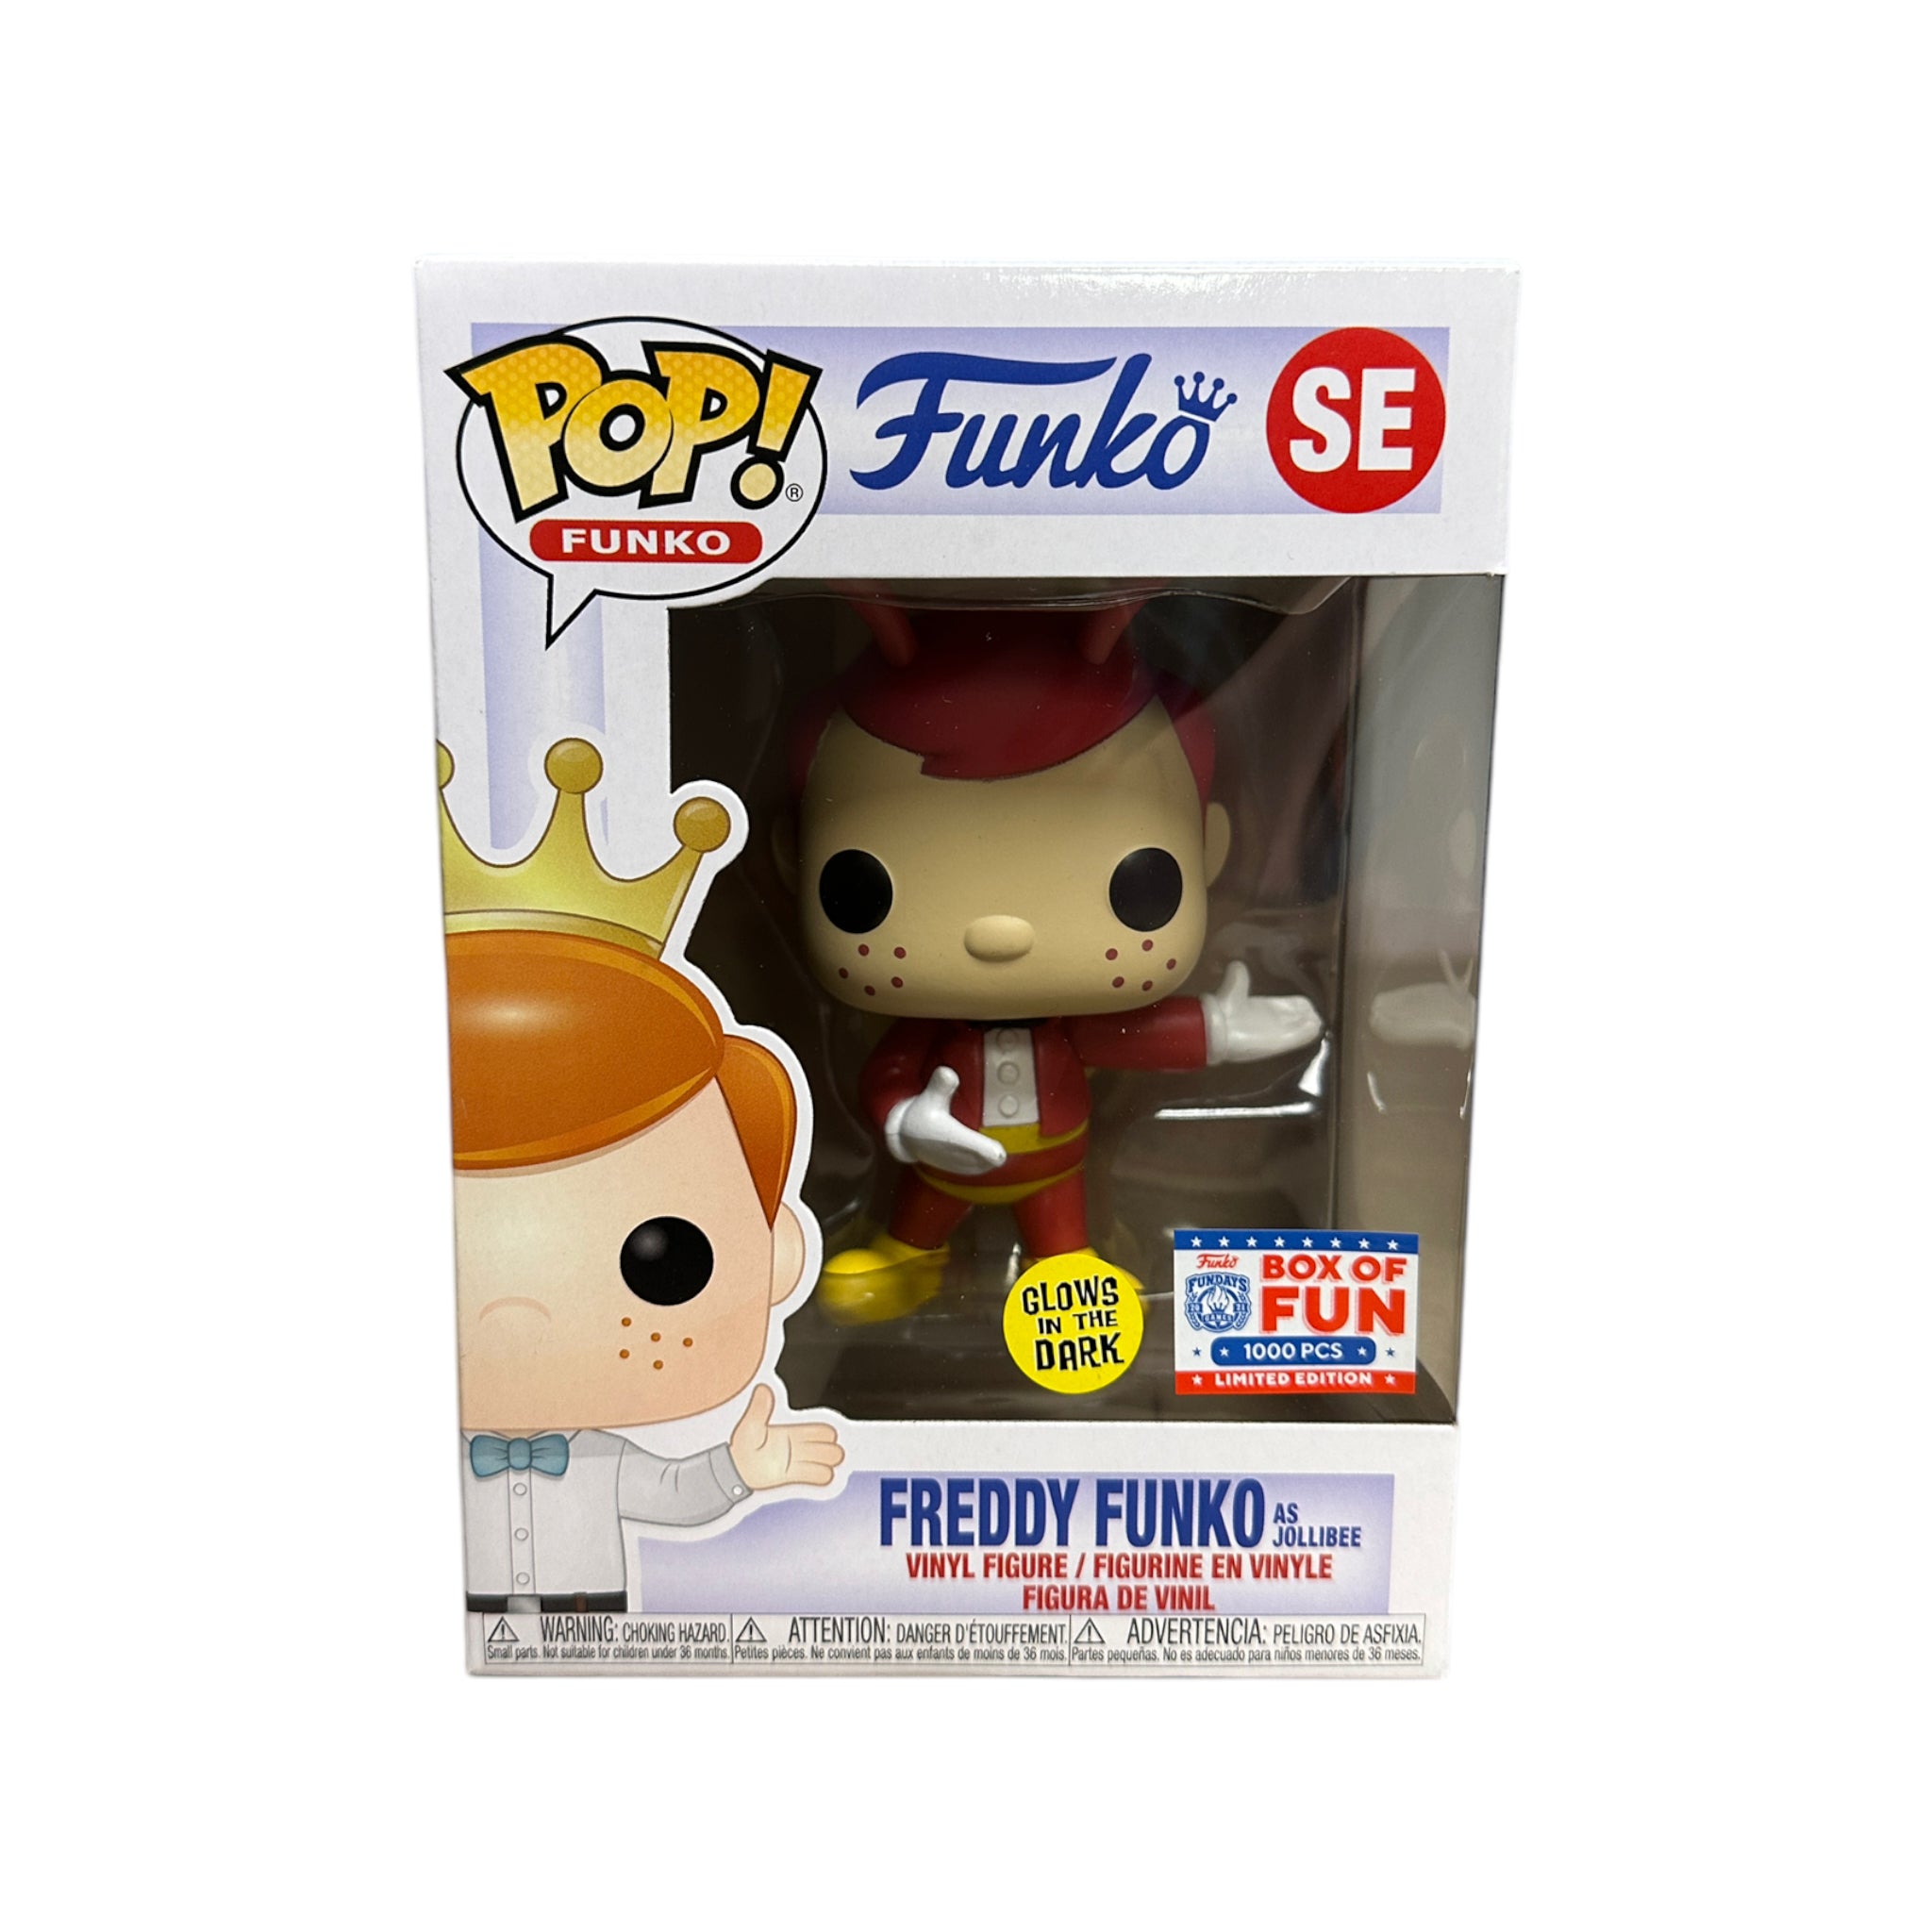 Freddy Funko as Jollibee (Glows in the Dark) Funko Pop! - Ad Icons - Virtual Funkon 2021 Box of Fun Exclusive LE1000 Pcs - Condition 8.5/10